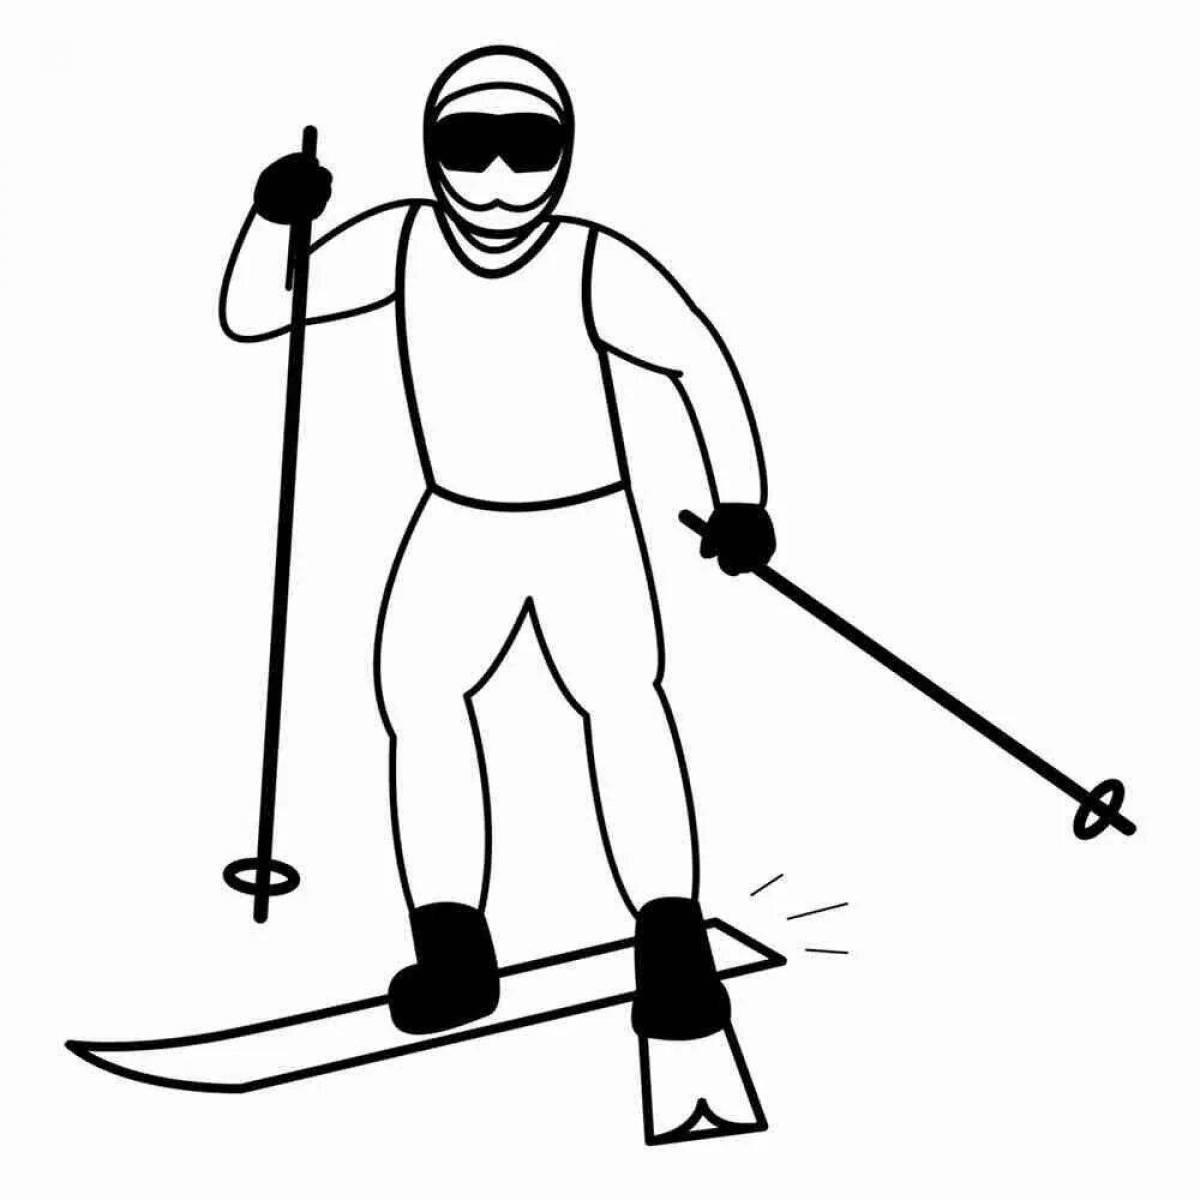 Coloring page fun ski jumping